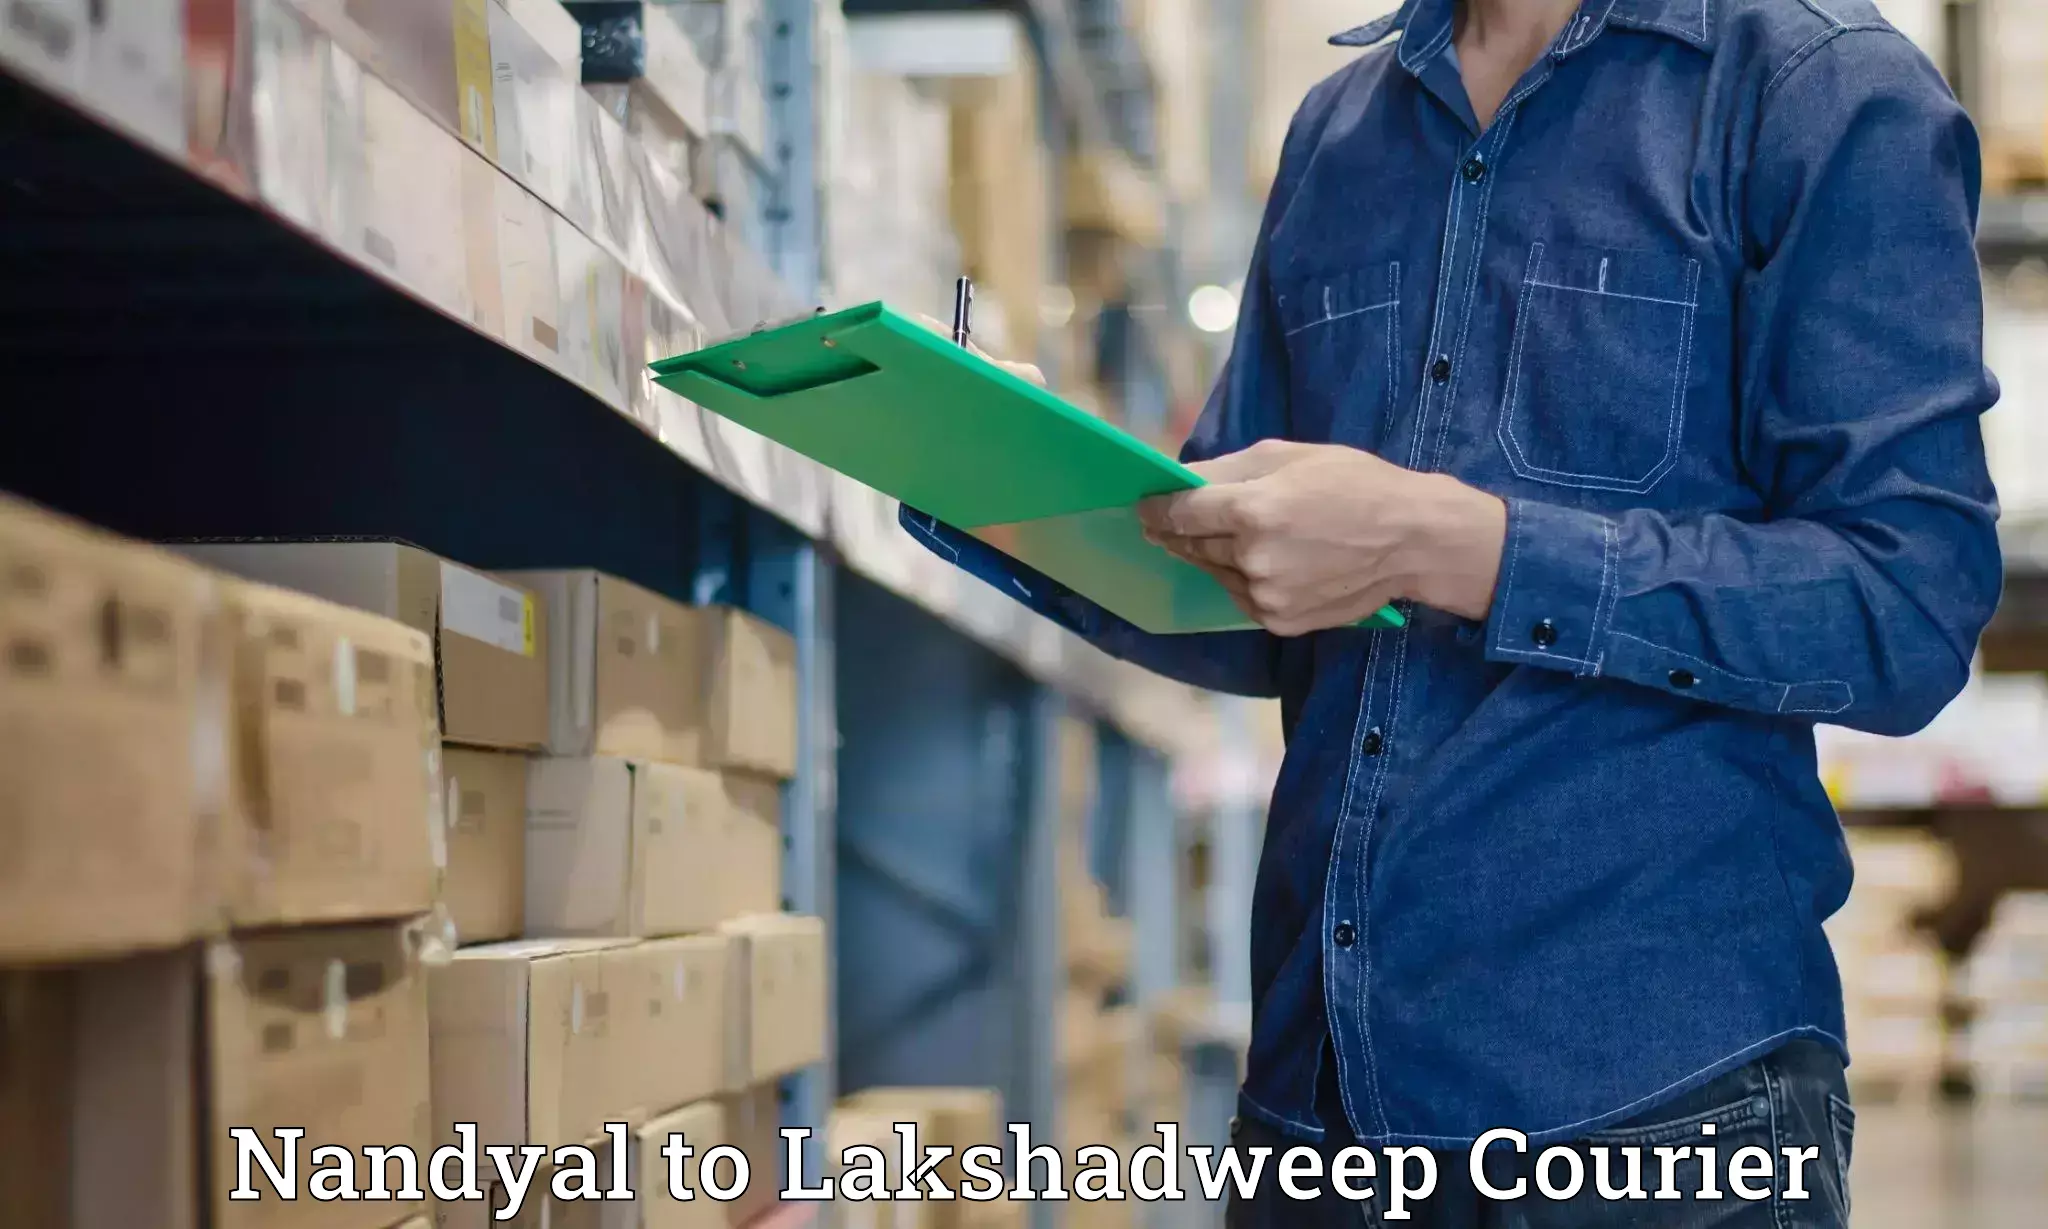 Express logistics service Nandyal to Lakshadweep